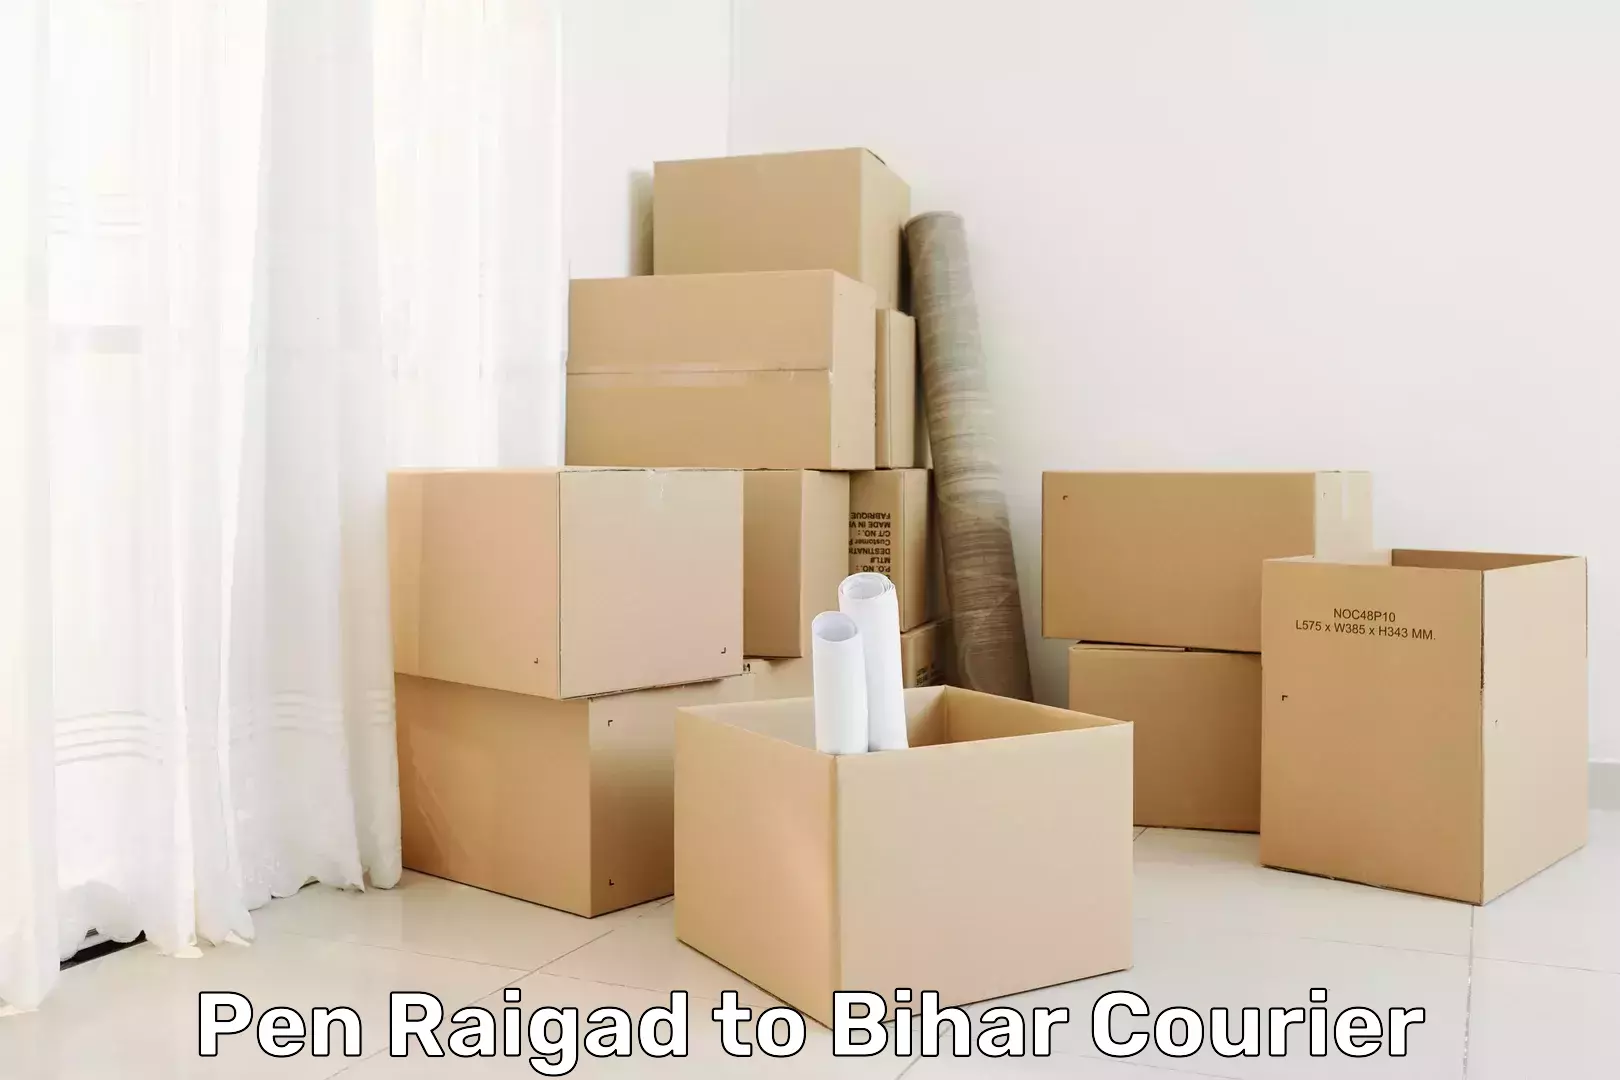 Reliable courier service Pen Raigad to Piro